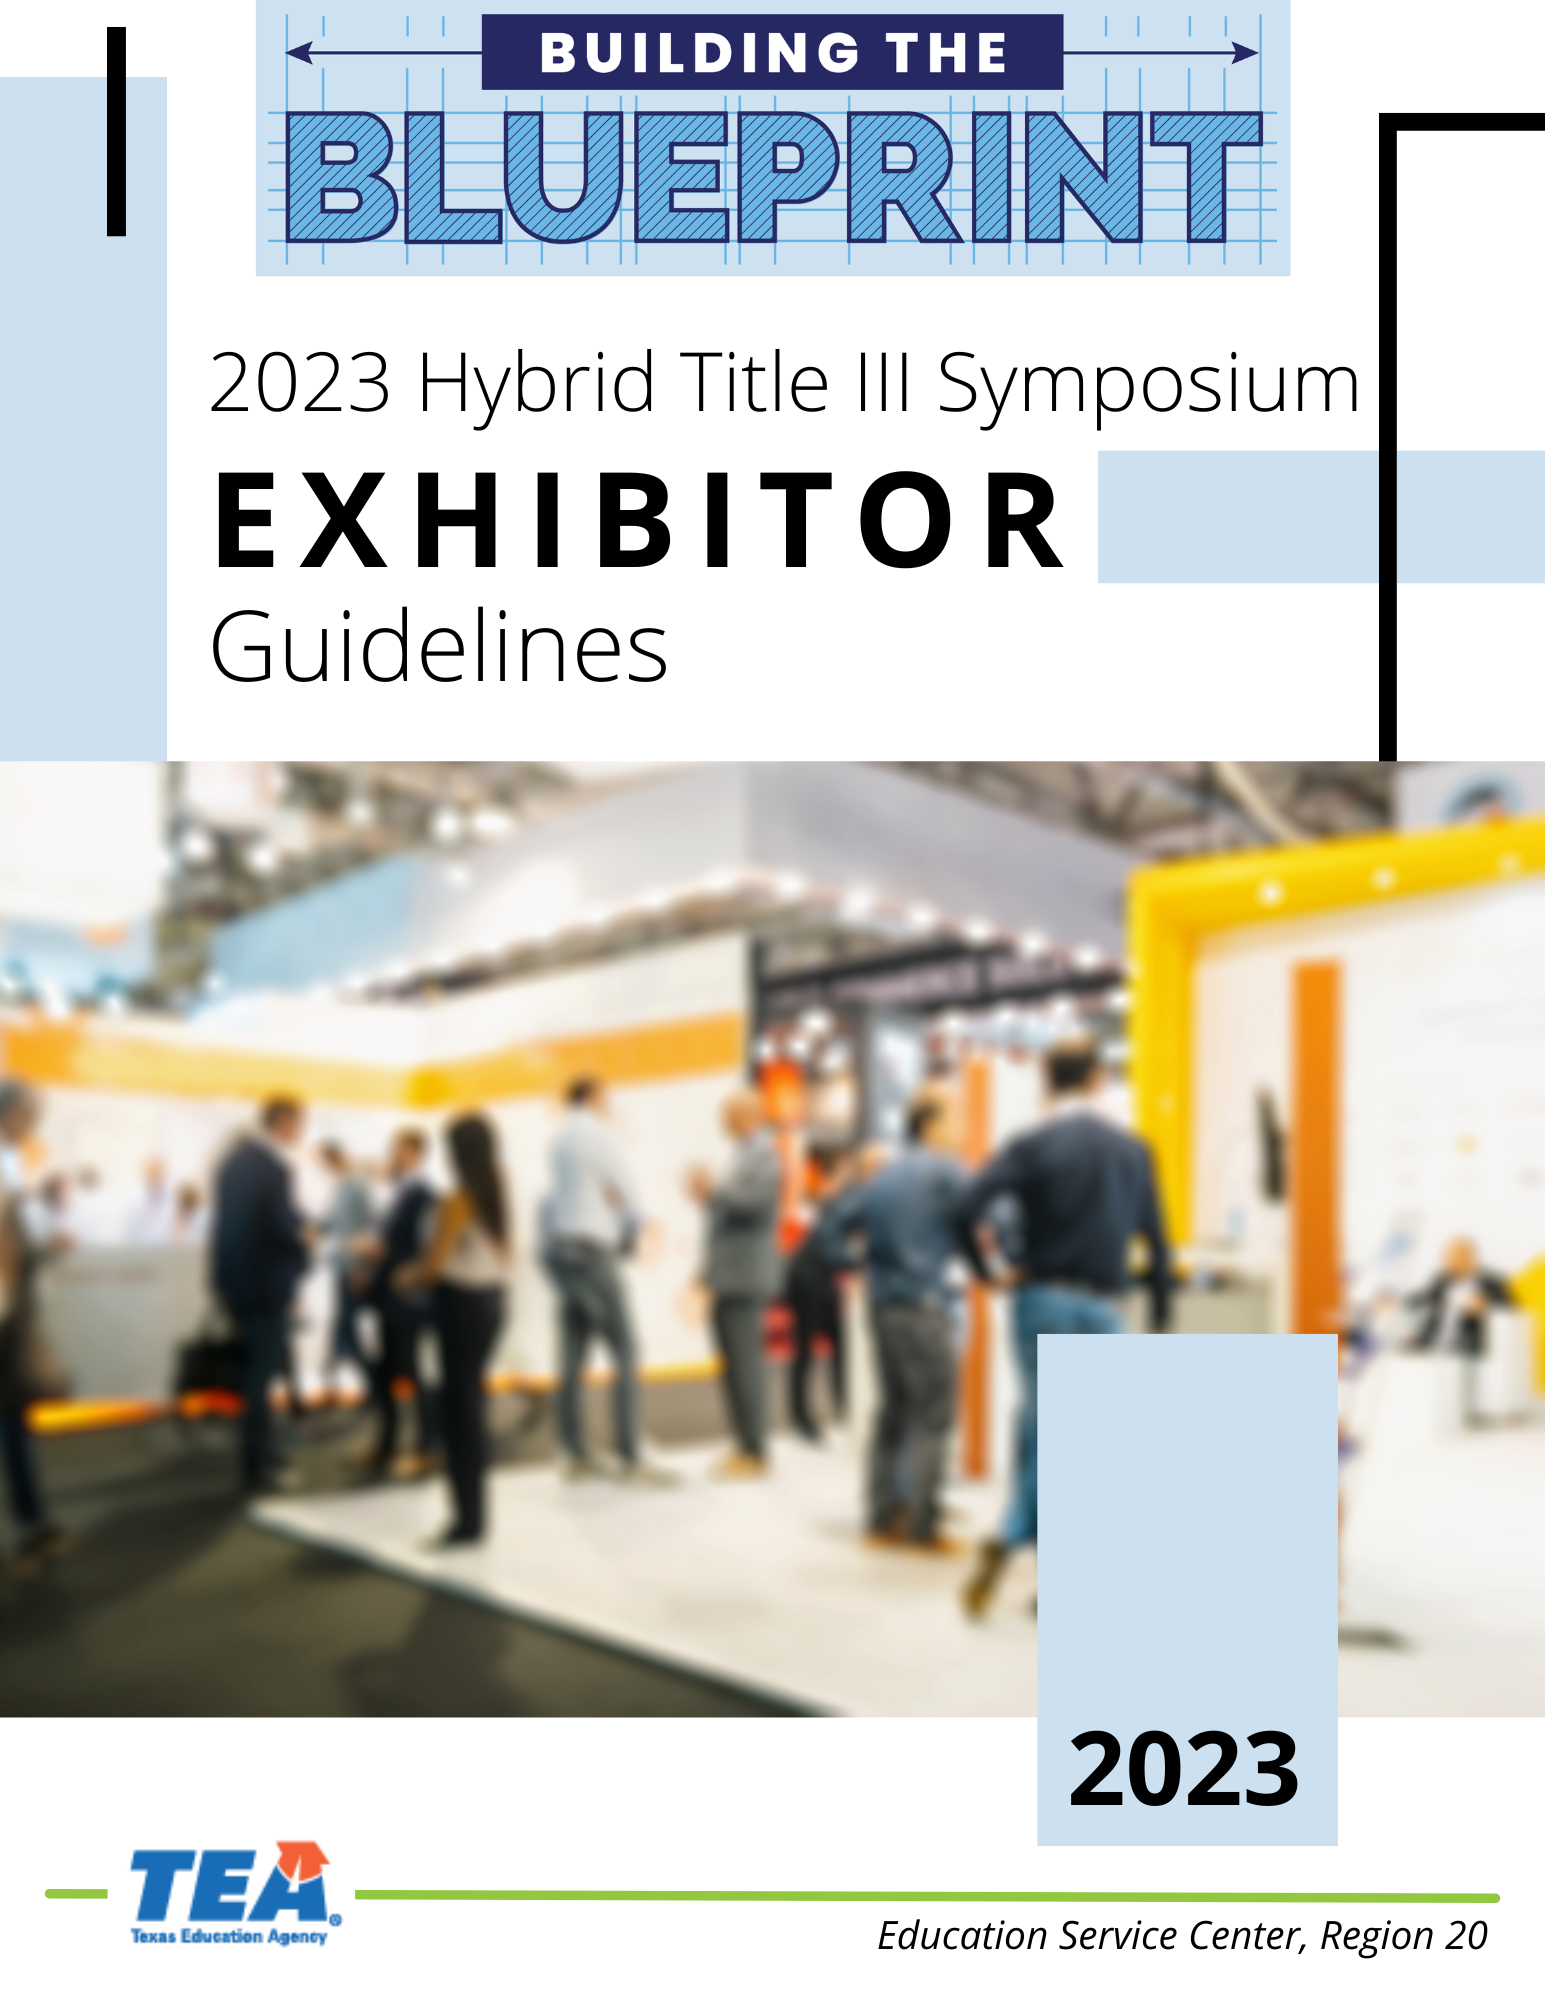 Title III Symposium Exhibitor Guidelines - 2023